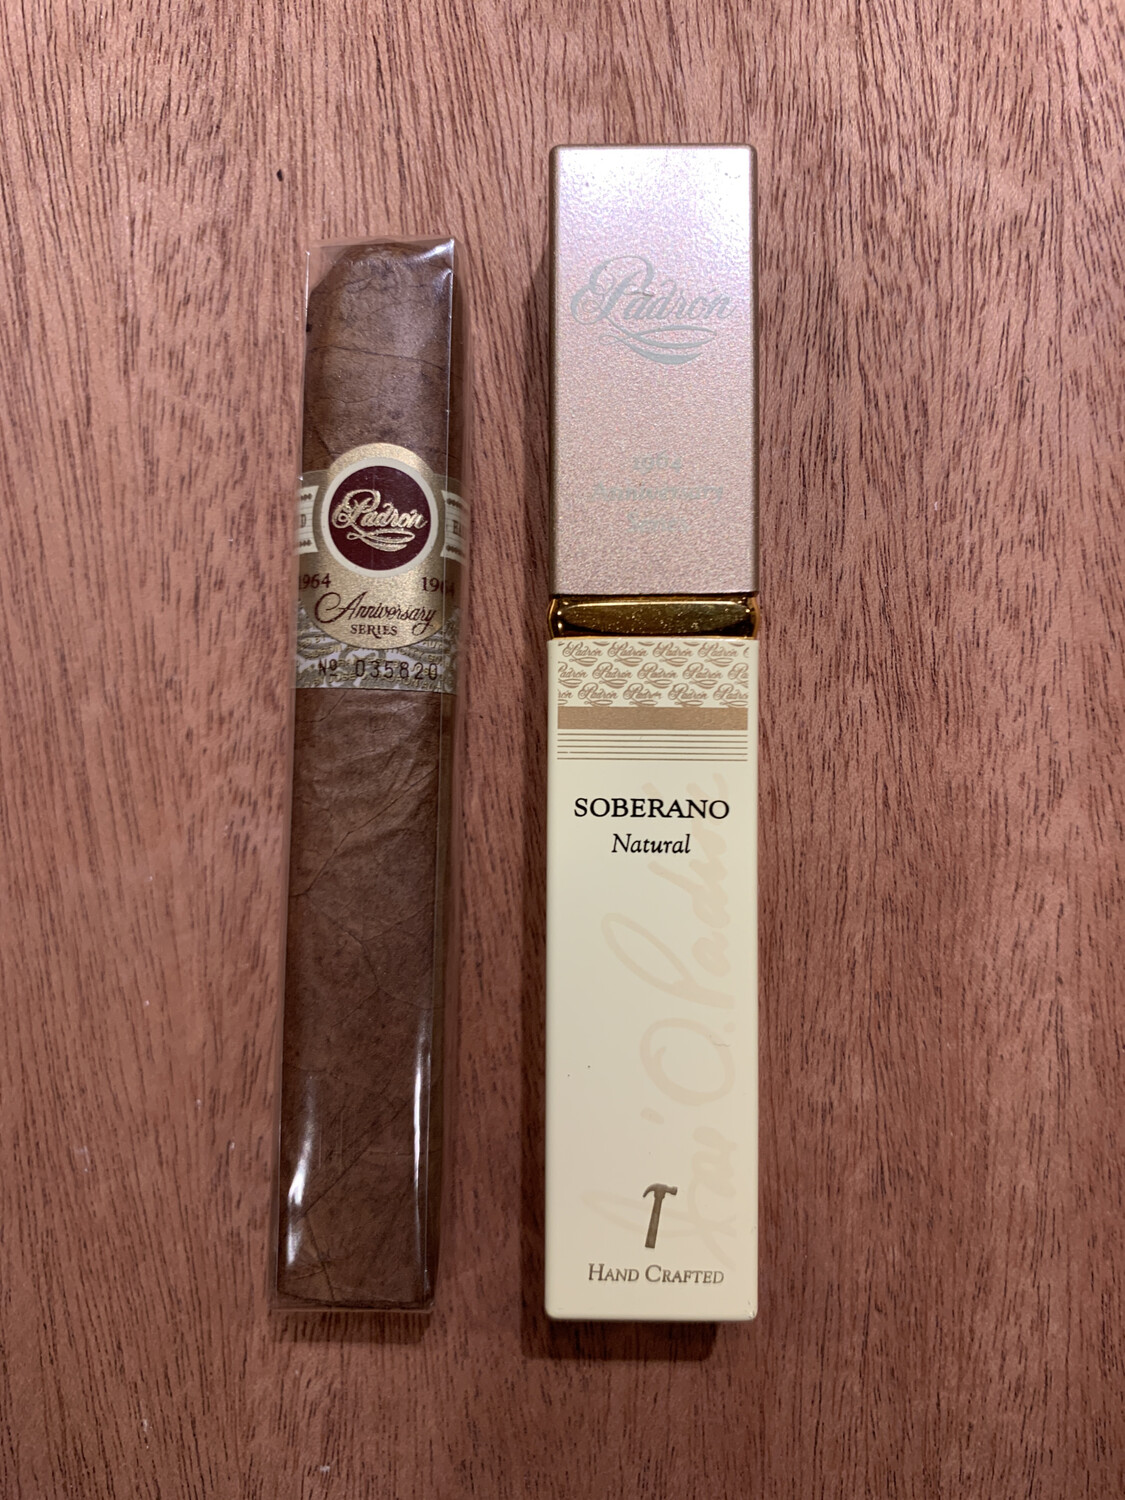 Padron 1964 Soberano Stx15 Mad Cigar